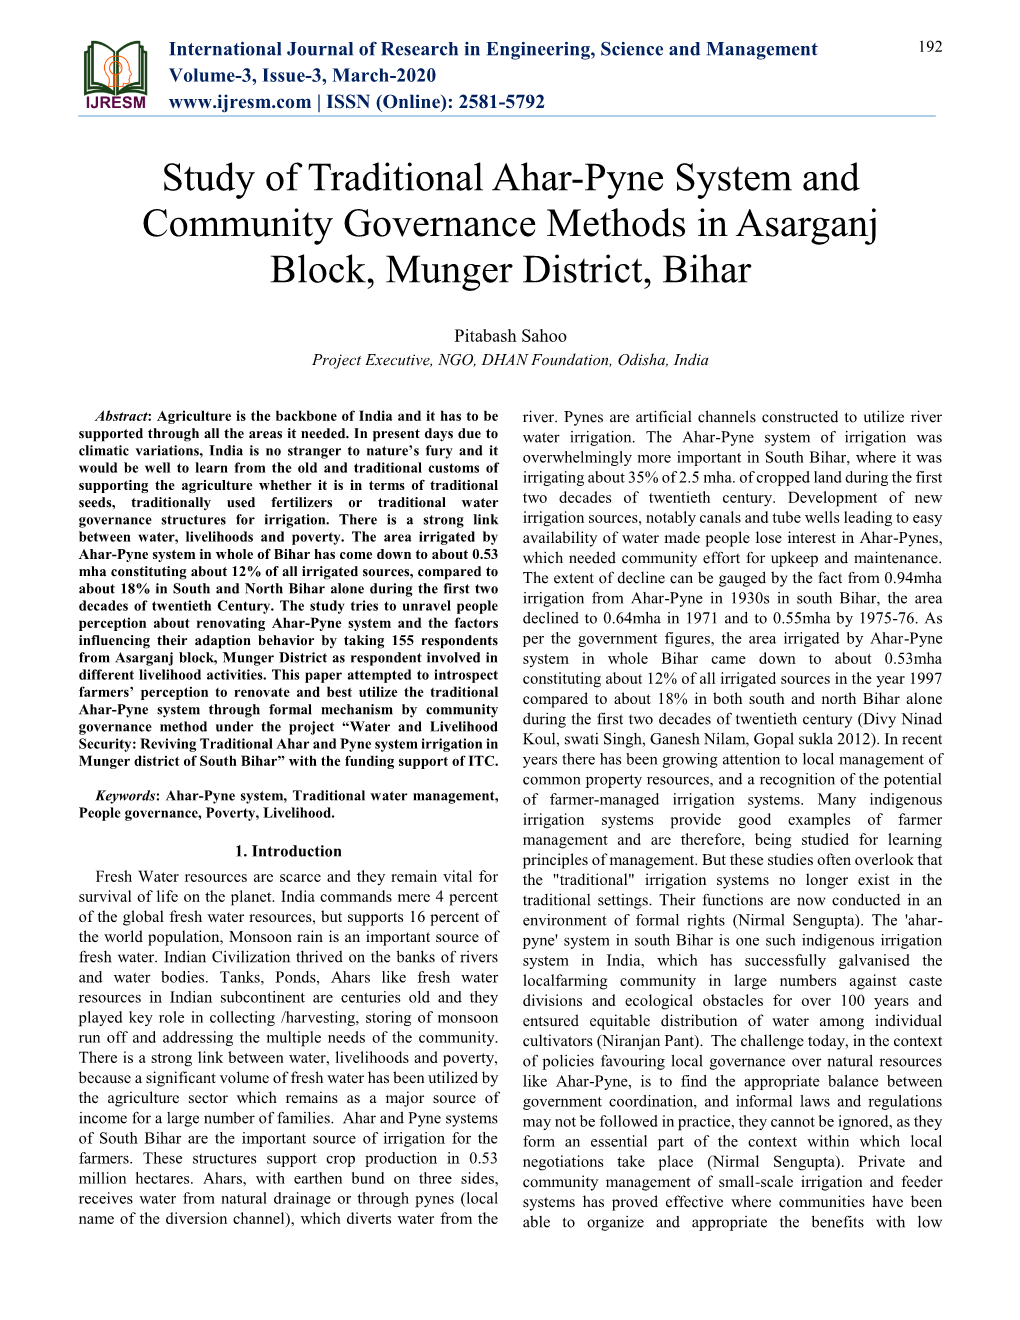 Study of Traditional Ahar-Pyne System and Community Governance Methods in Asarganj Block, Munger District, Bihar